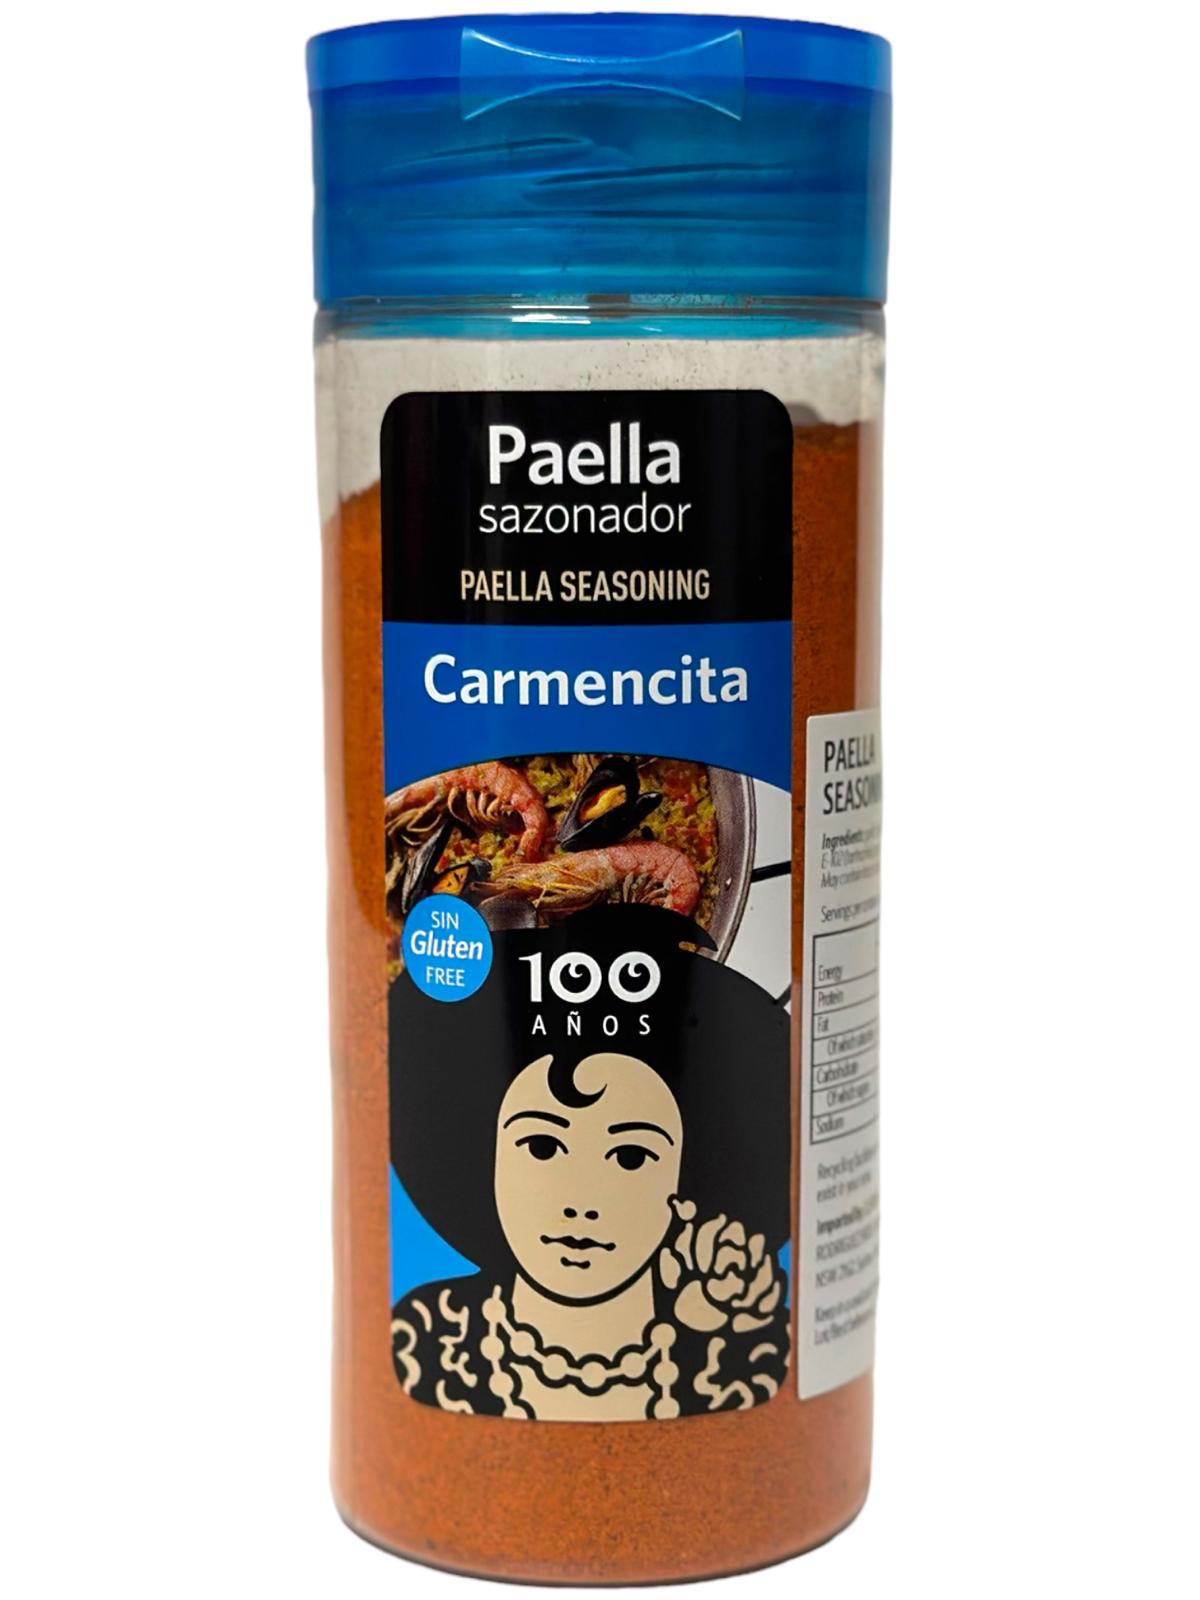 Carmencita Spanish Paella Seasoning 295g - 3 pack 855g total